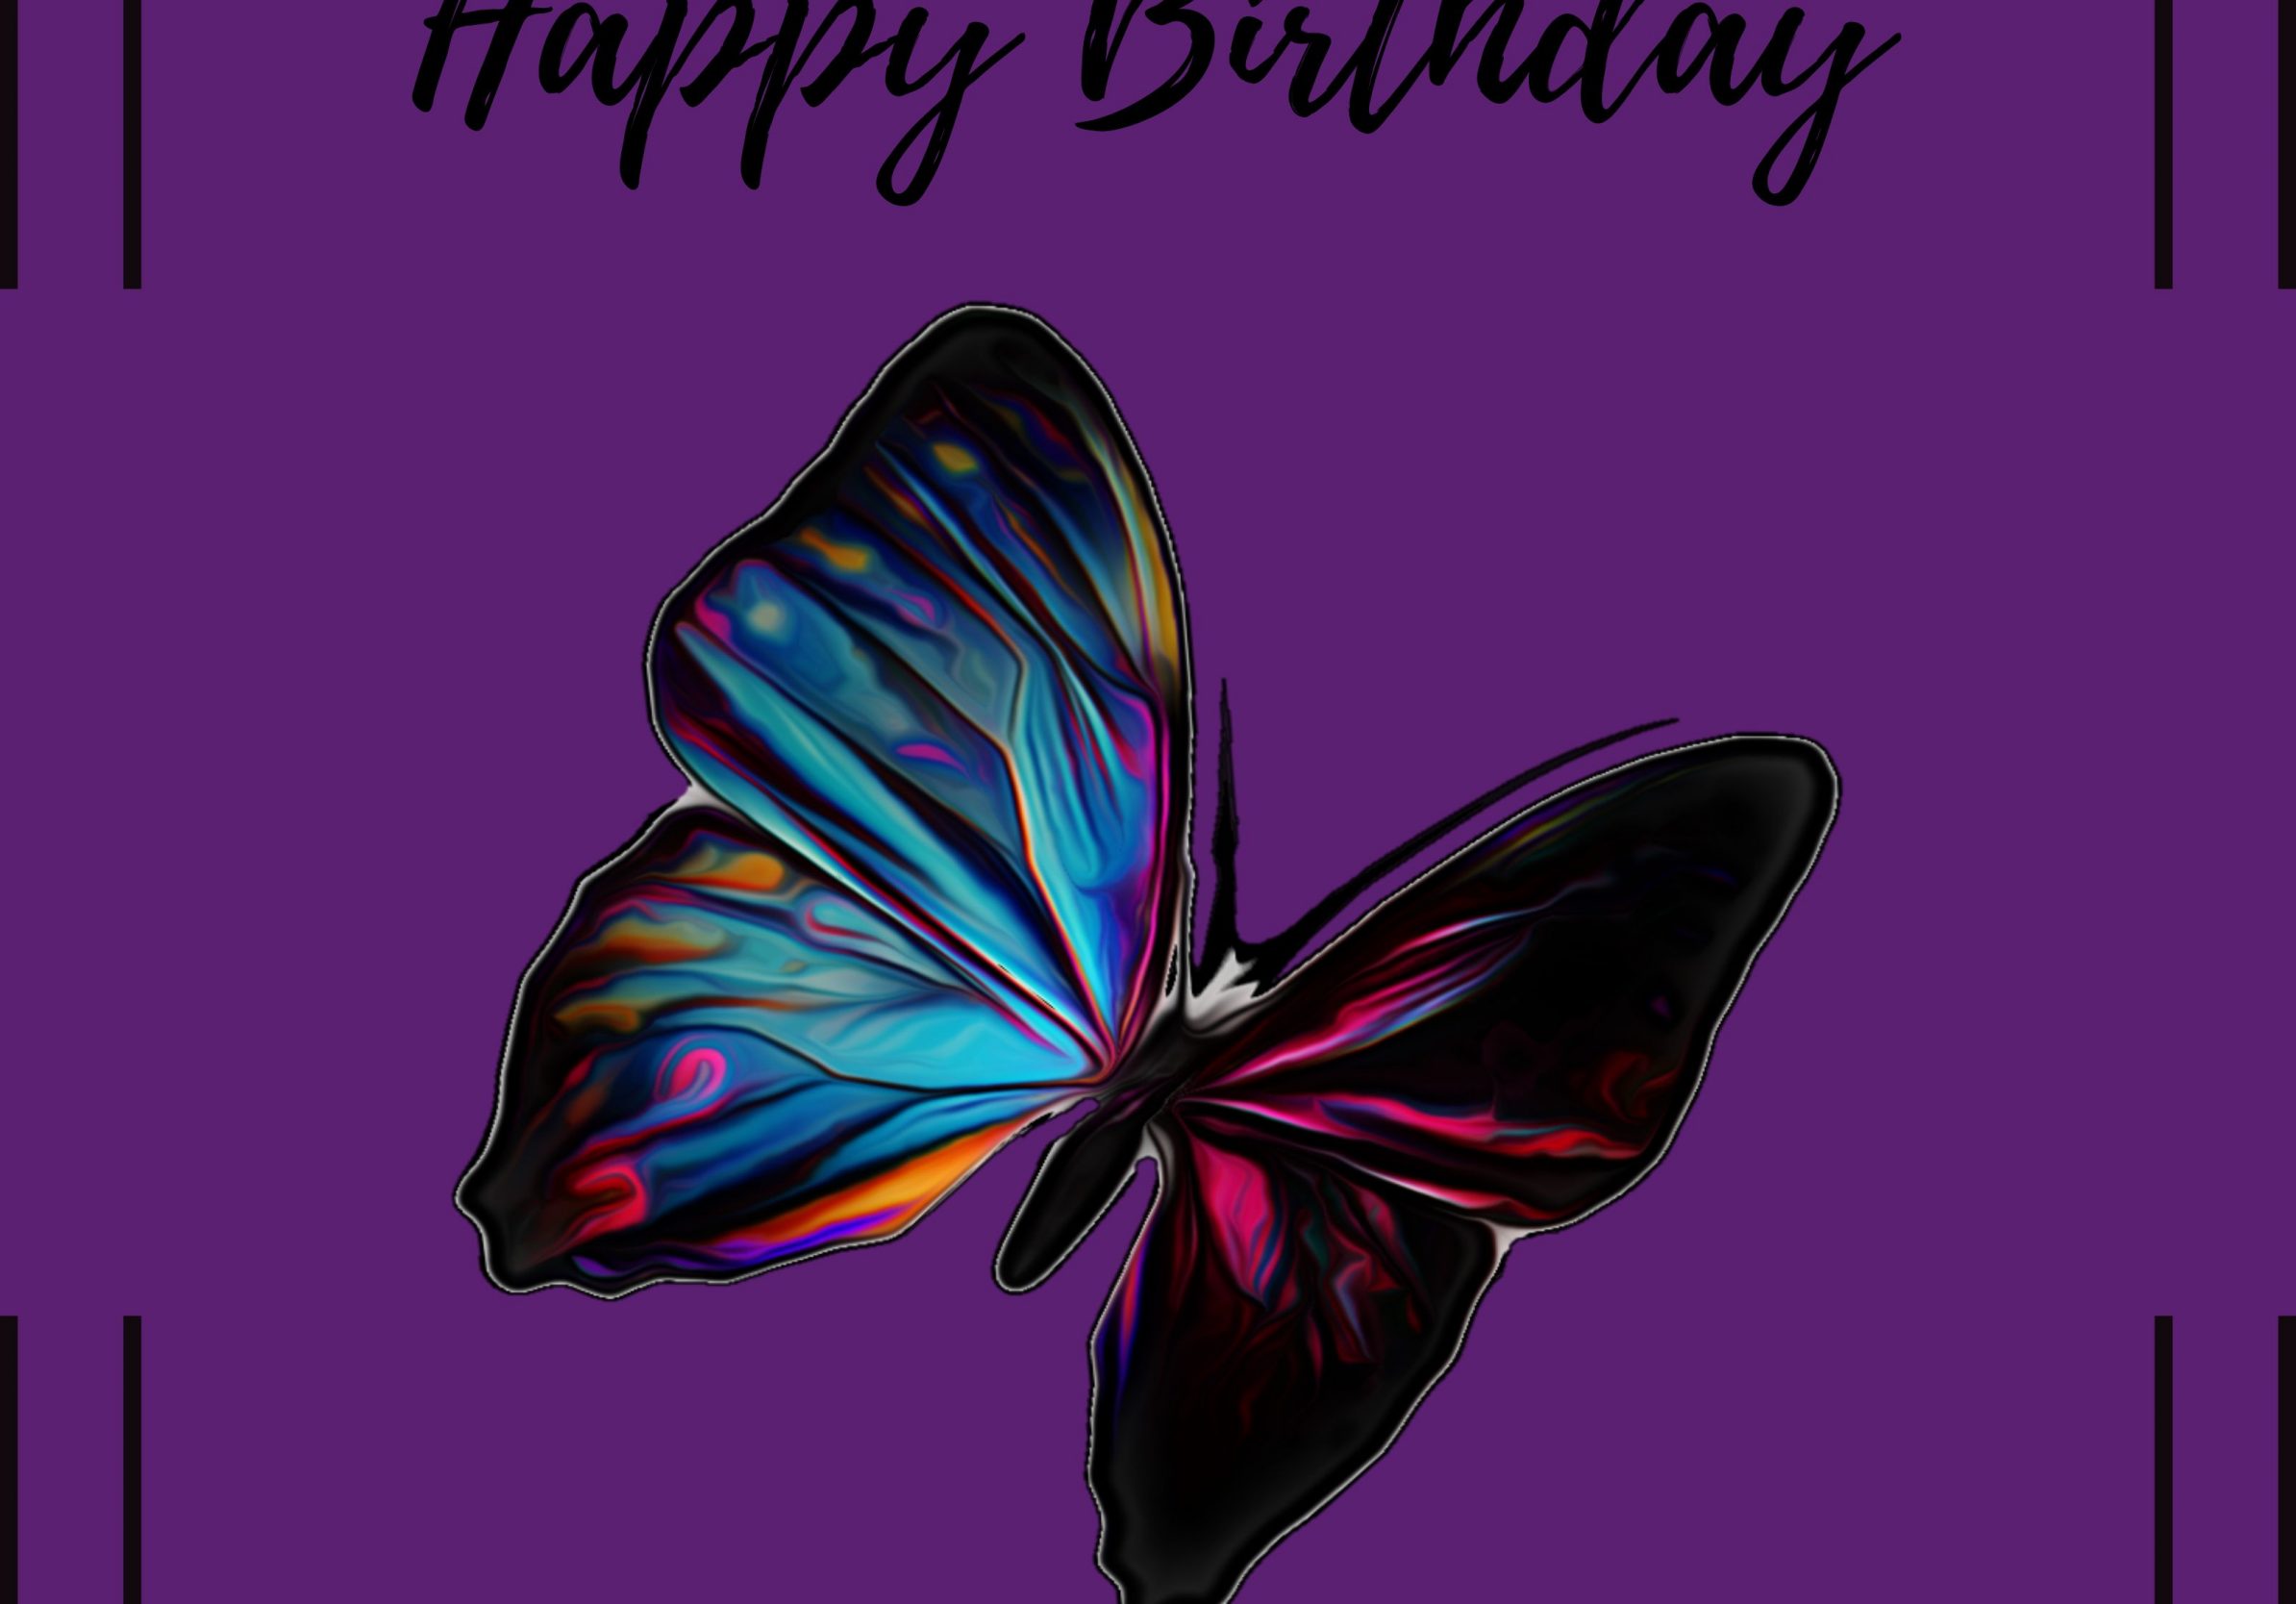 2388x1668 iPad Pro wallpapers Happy Birthday Rainbow Butterfly Ipad Wallpaper 2388x1668 pixels resolution